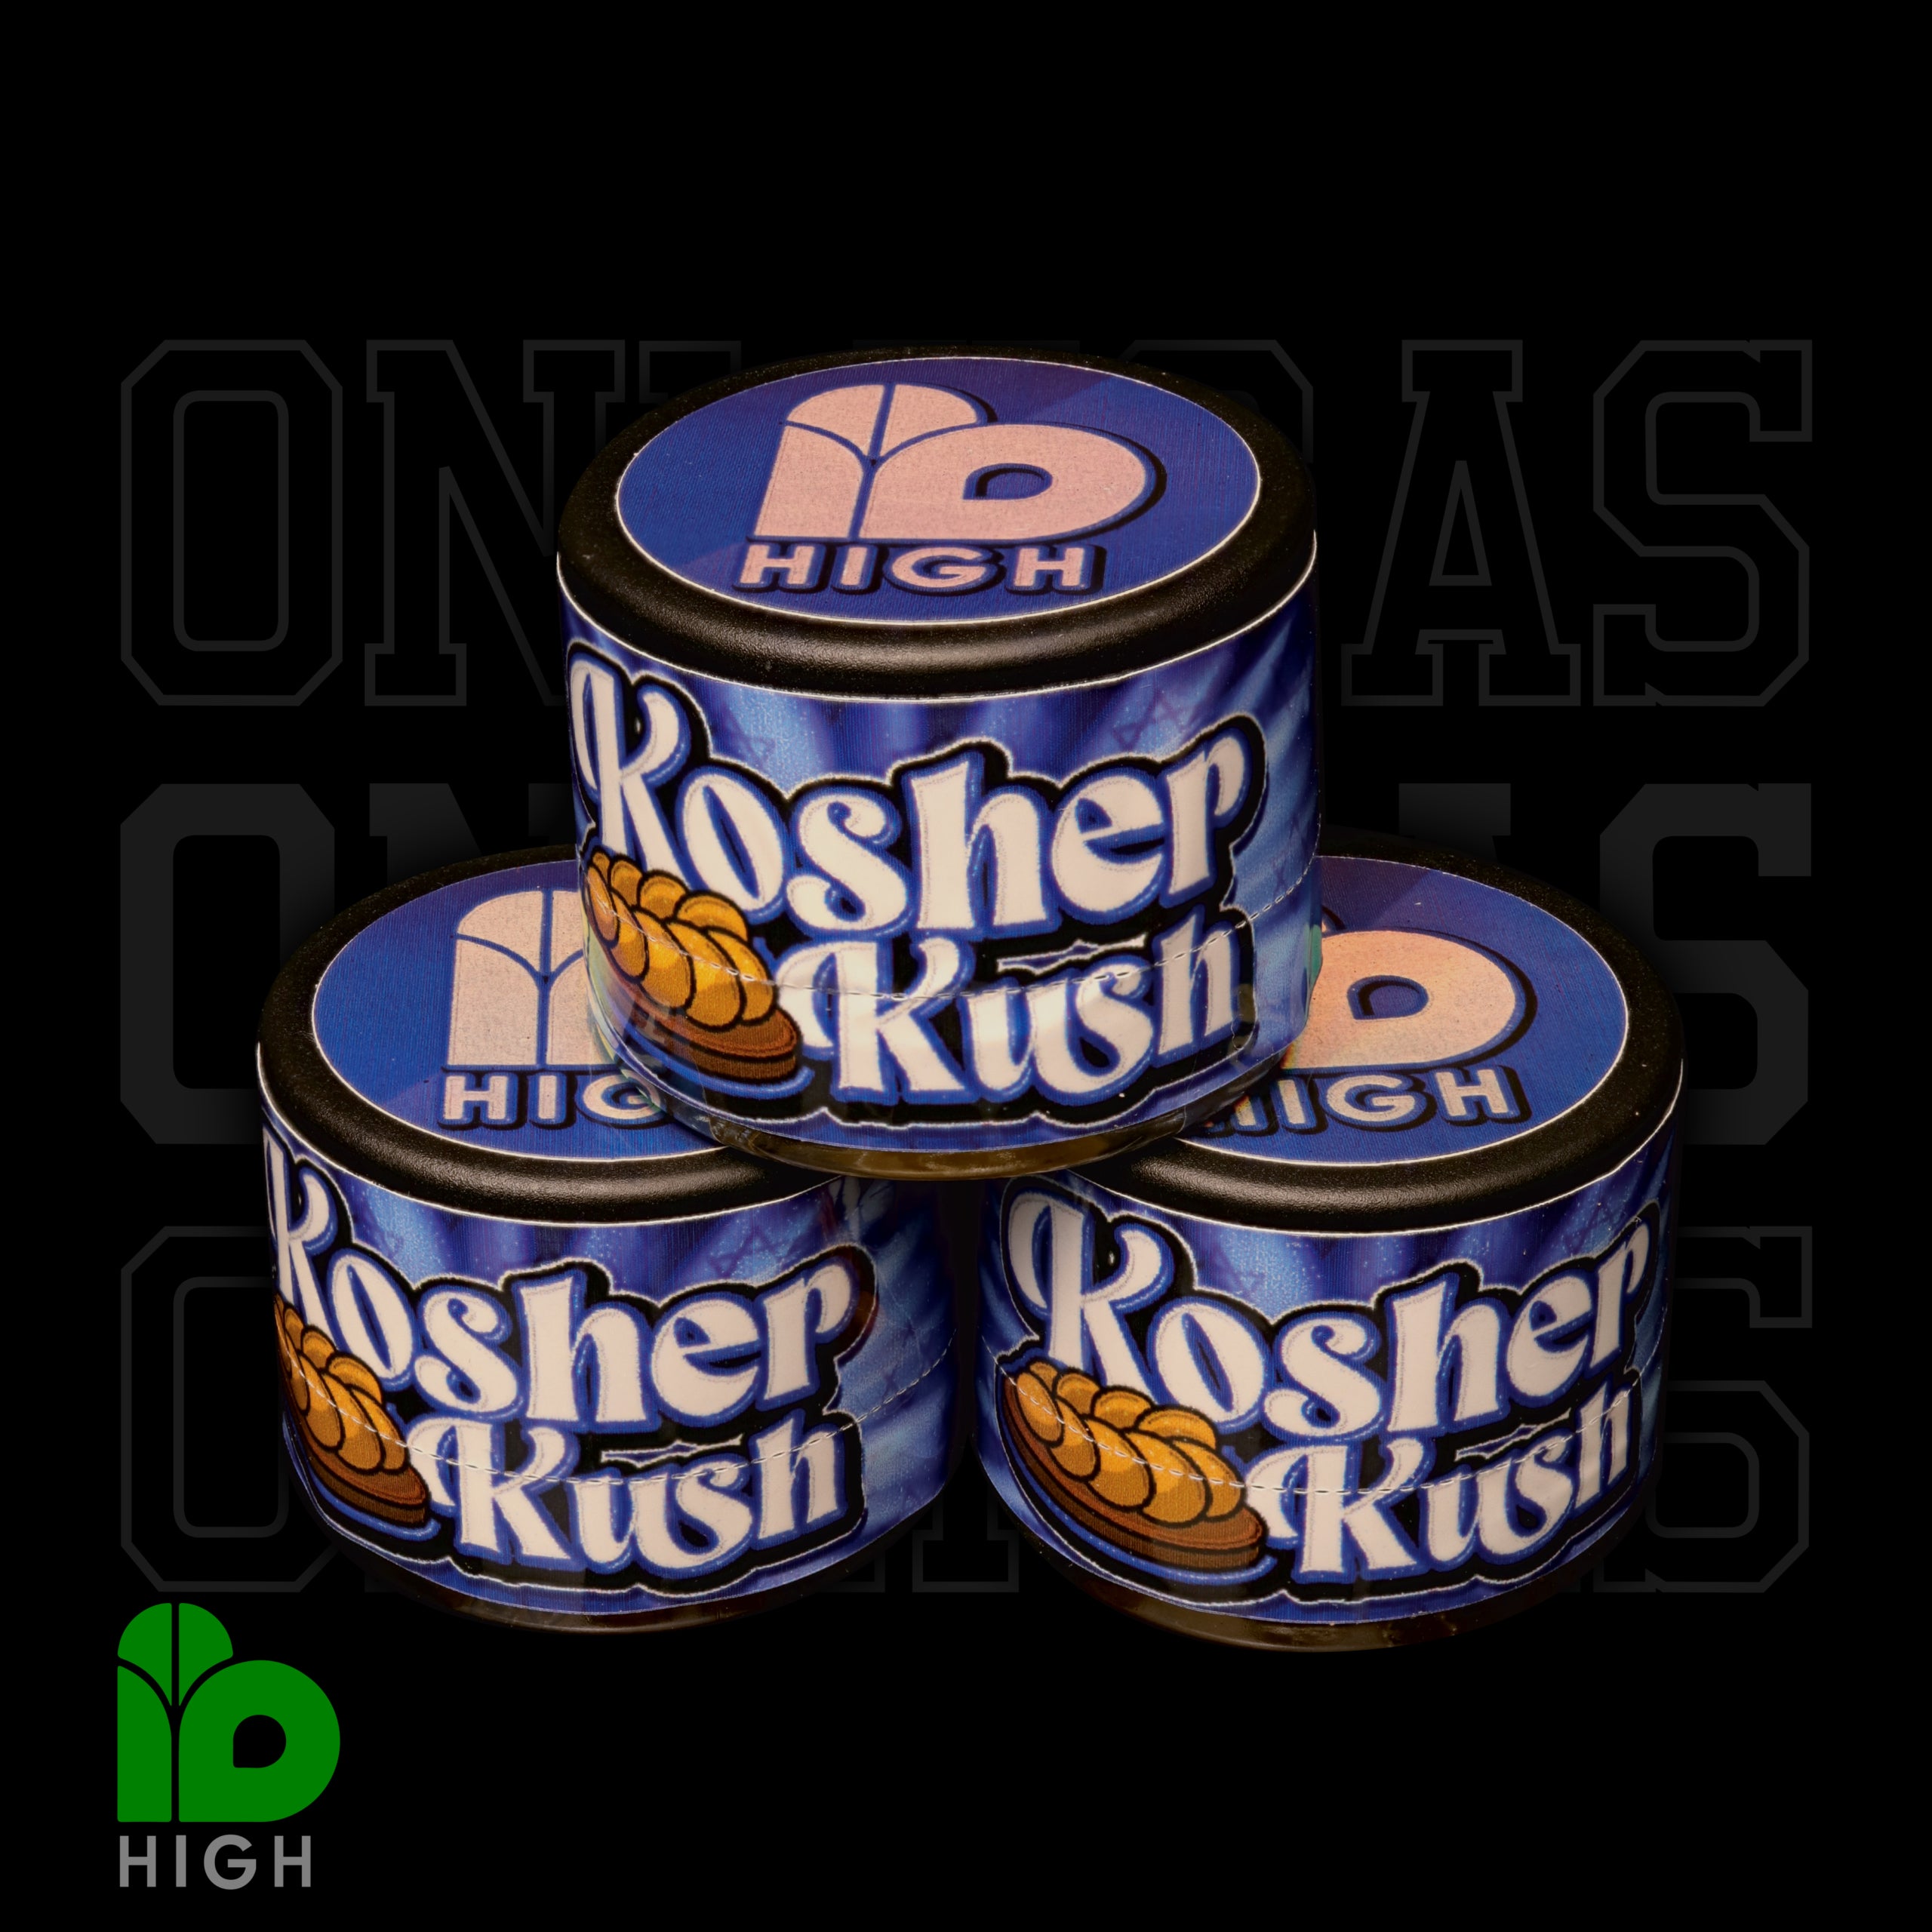 IB High Kosher Kush LR